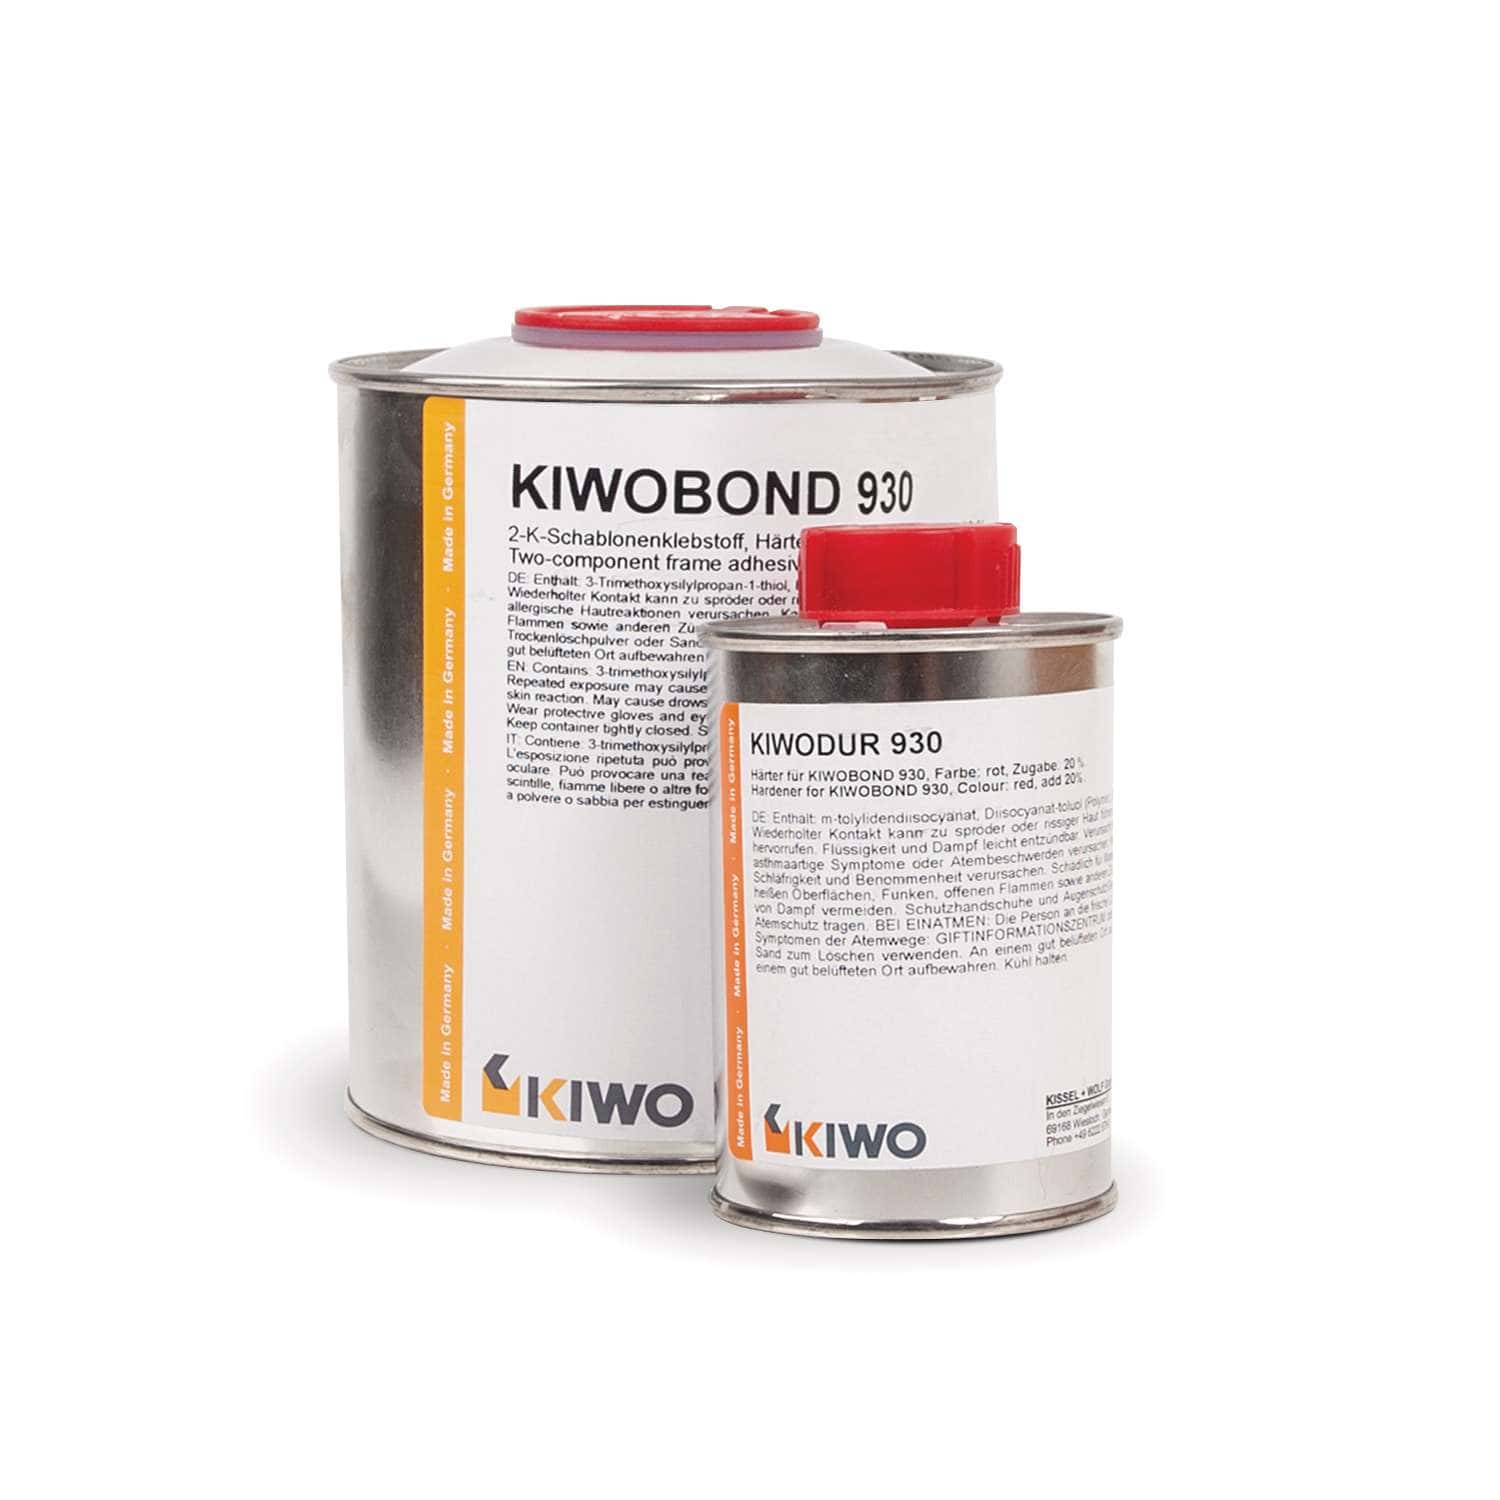 Kiwo - Kiwobond 930, adesivo per tessuti